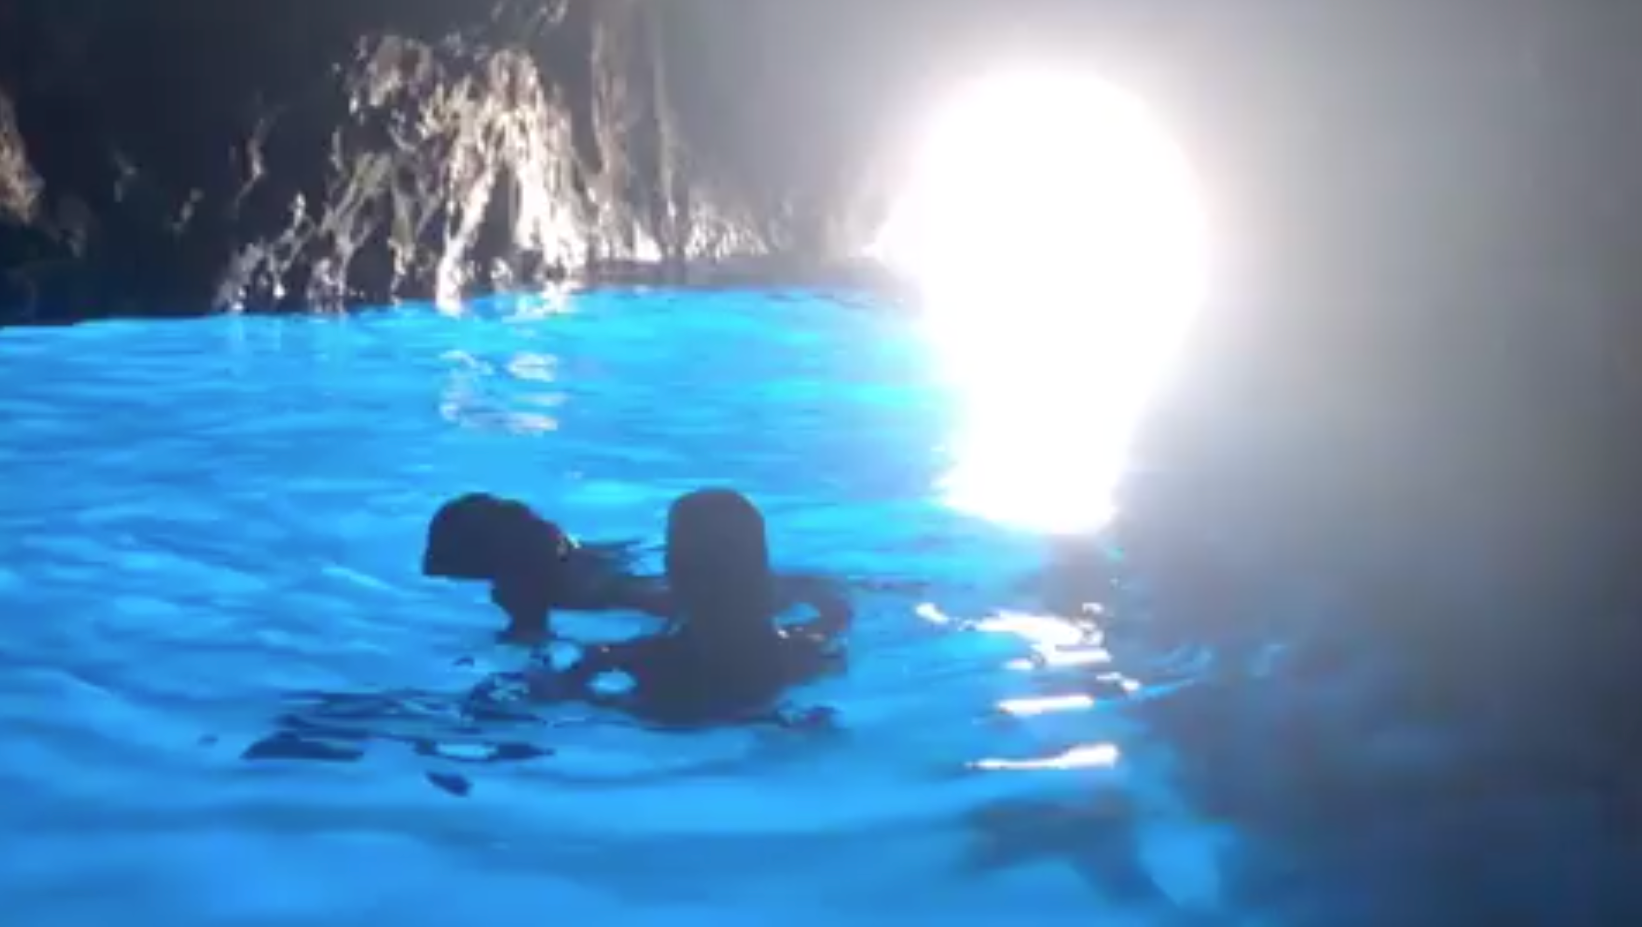 Heidi Klum Fined During Honeymoon for Swimming in Forbidden Italian Waters